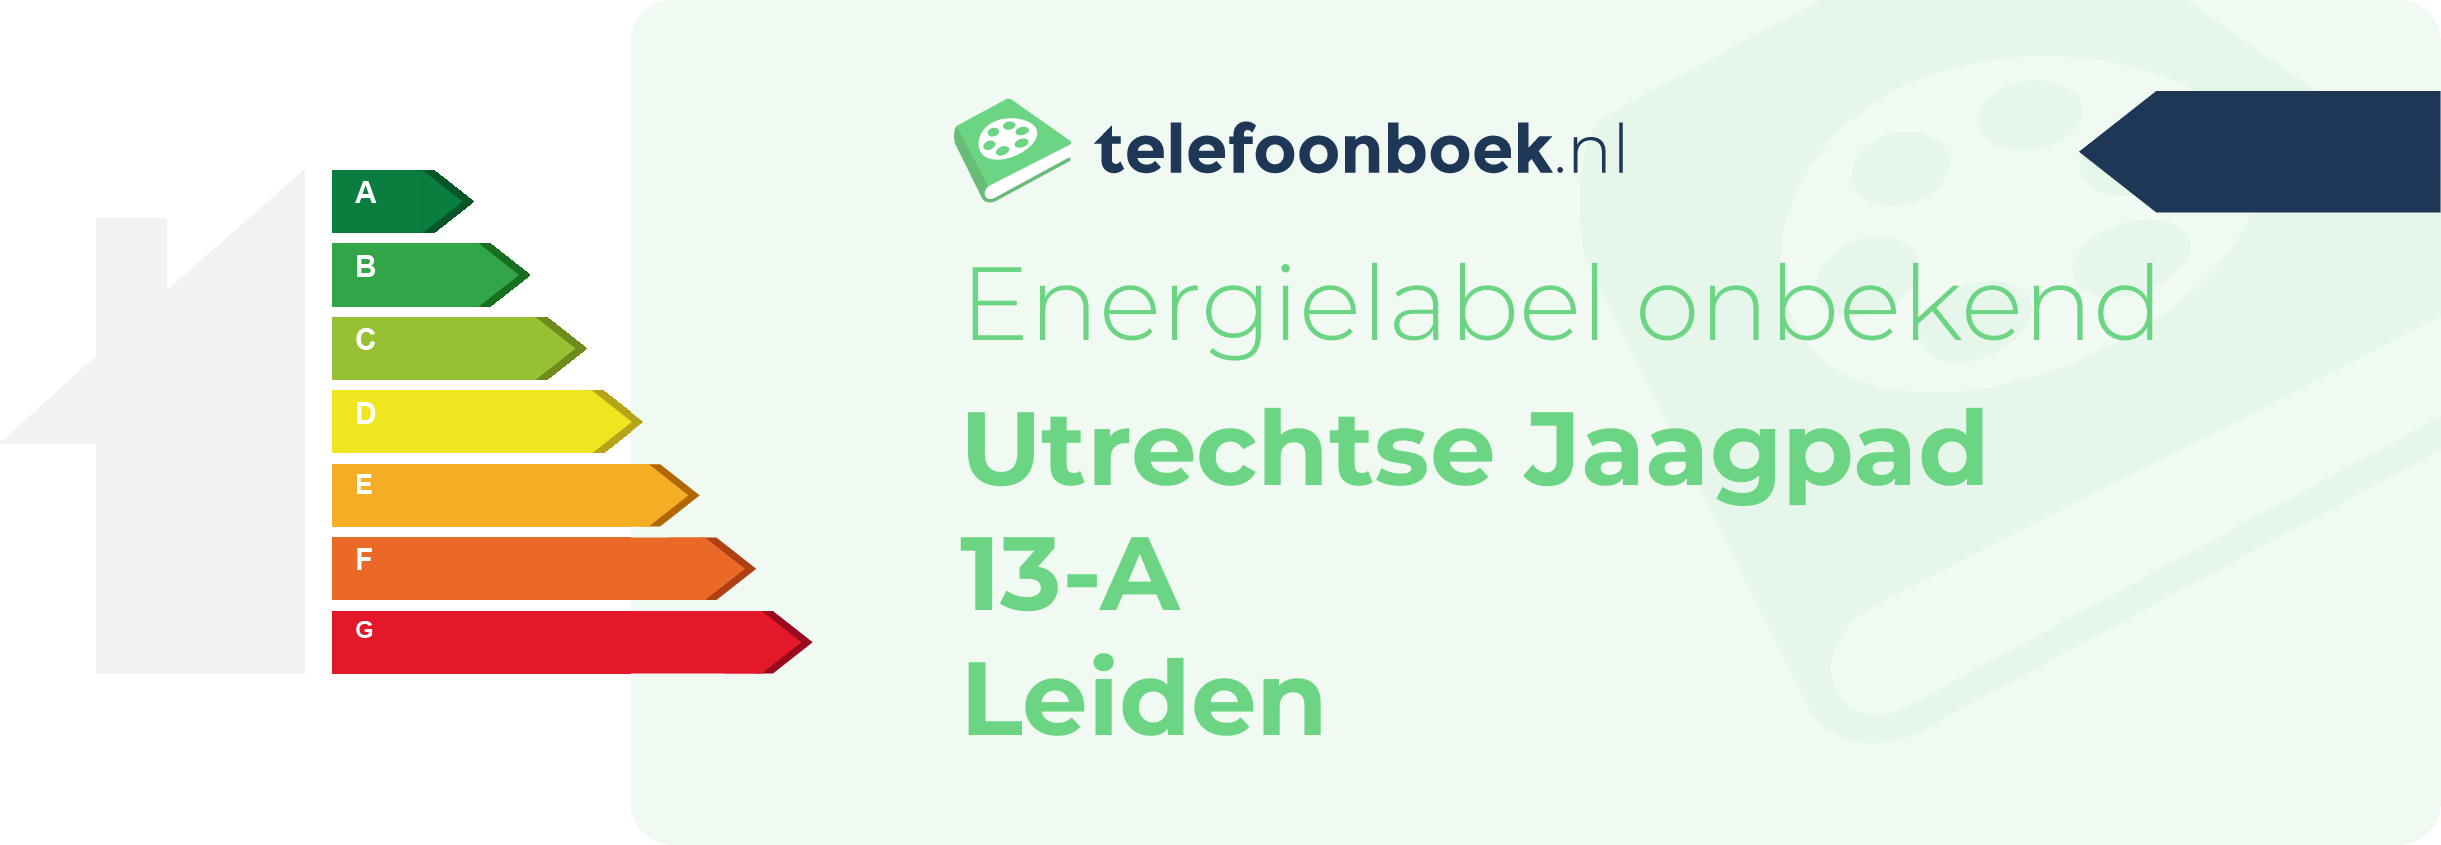 Energielabel Utrechtse Jaagpad 13-A Leiden